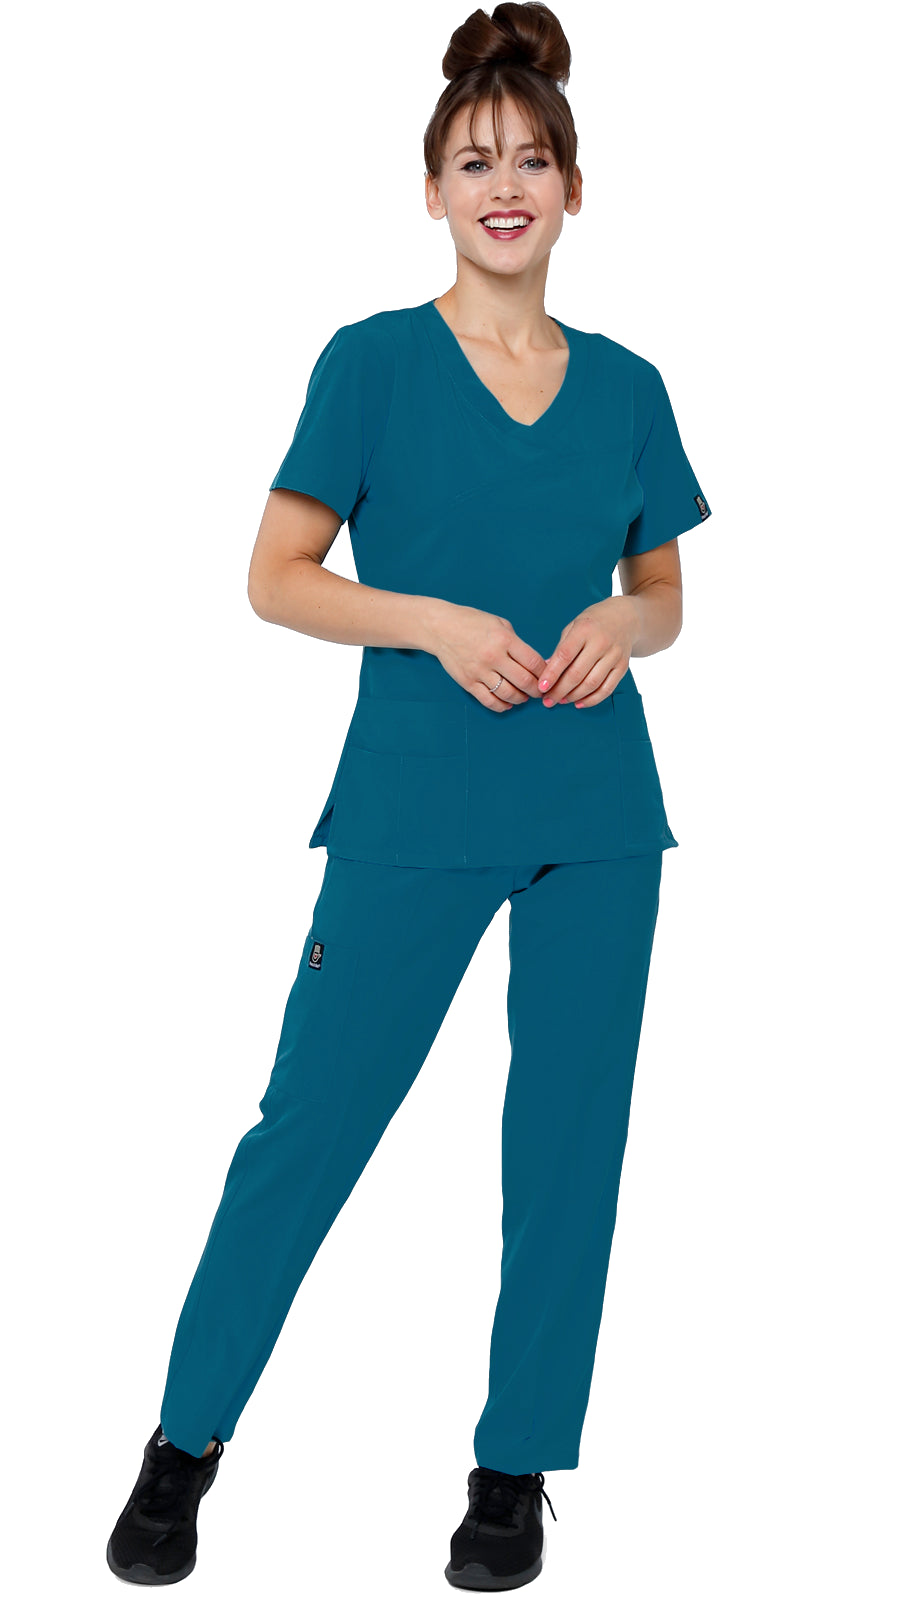 Dress A Med Women's Slim Fit 4 Way Stretch Uniform Scrubs